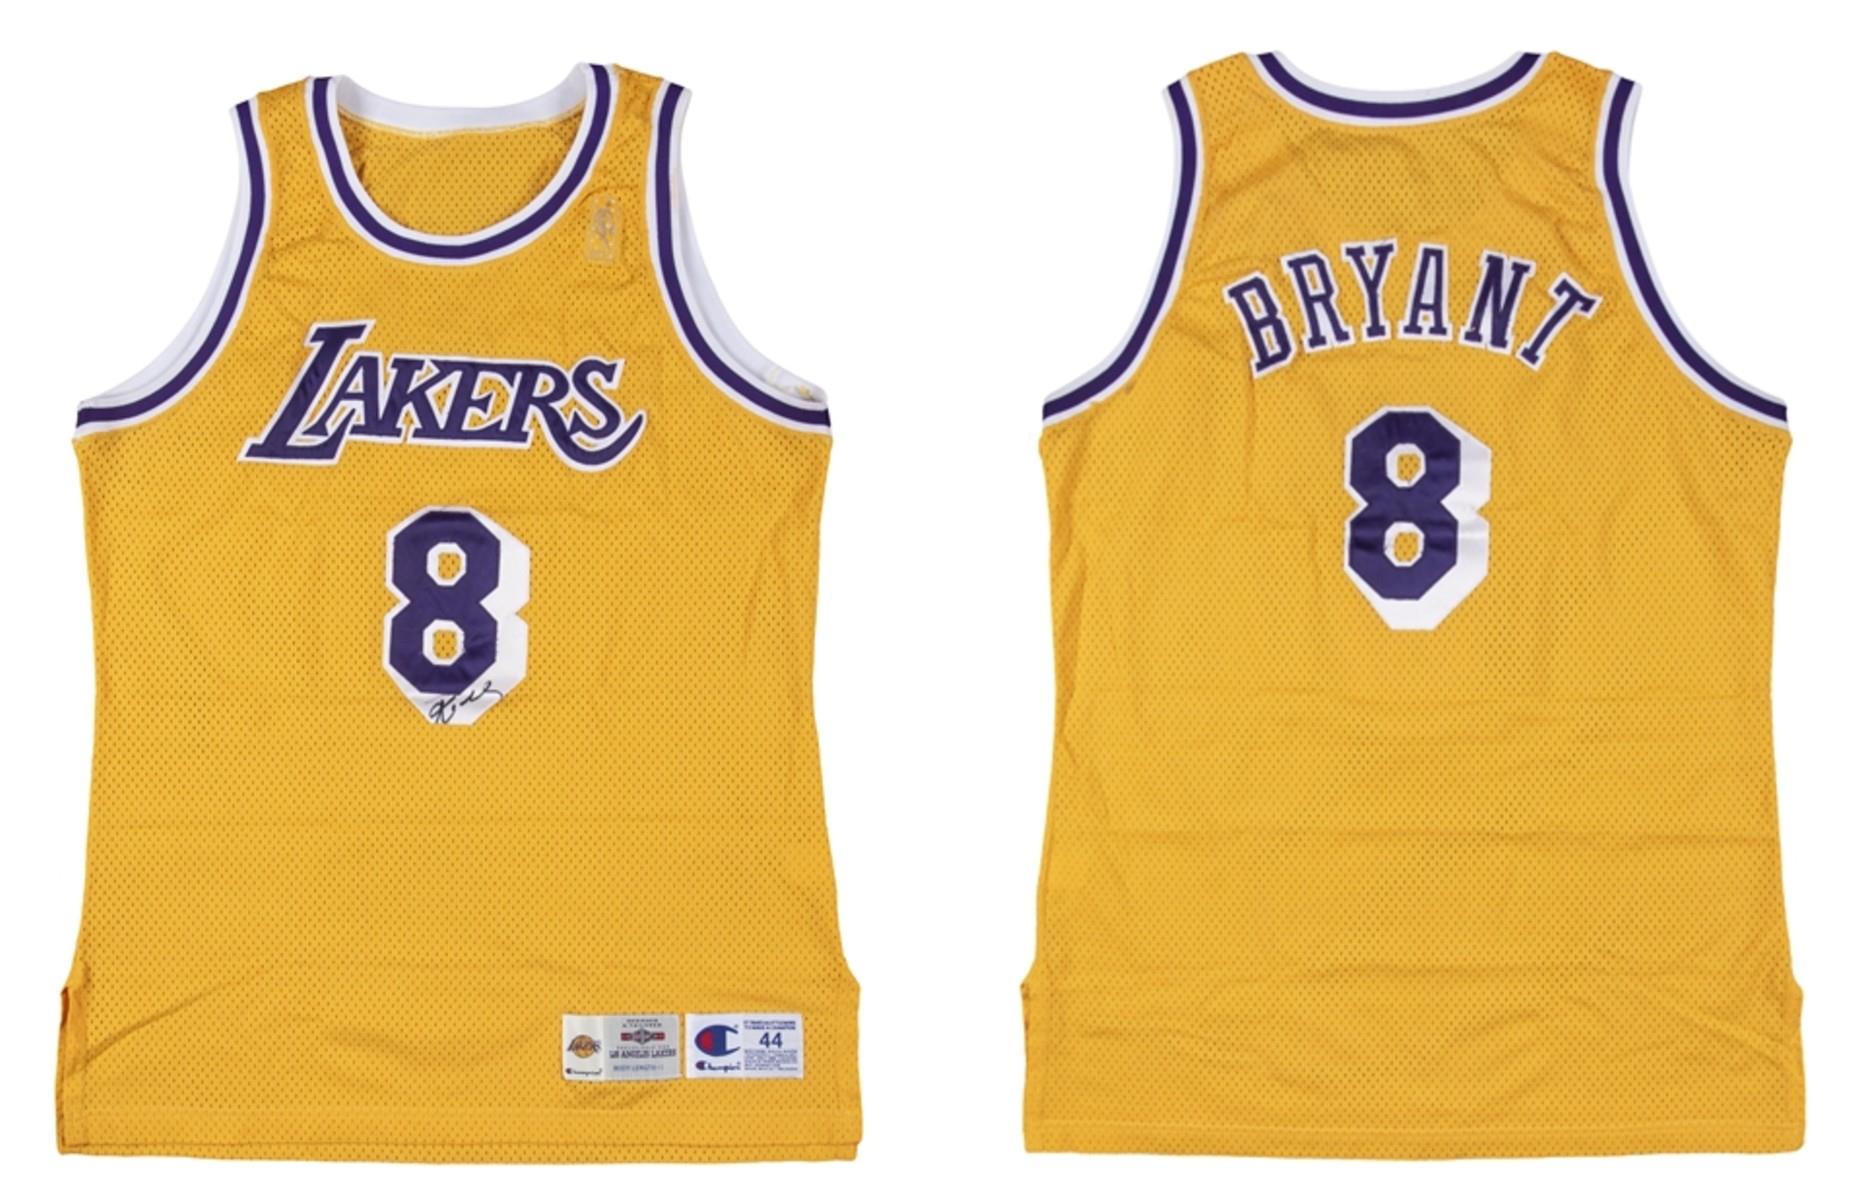 Kobe Bryant’s jersey: $3.69 million (£2.7m)